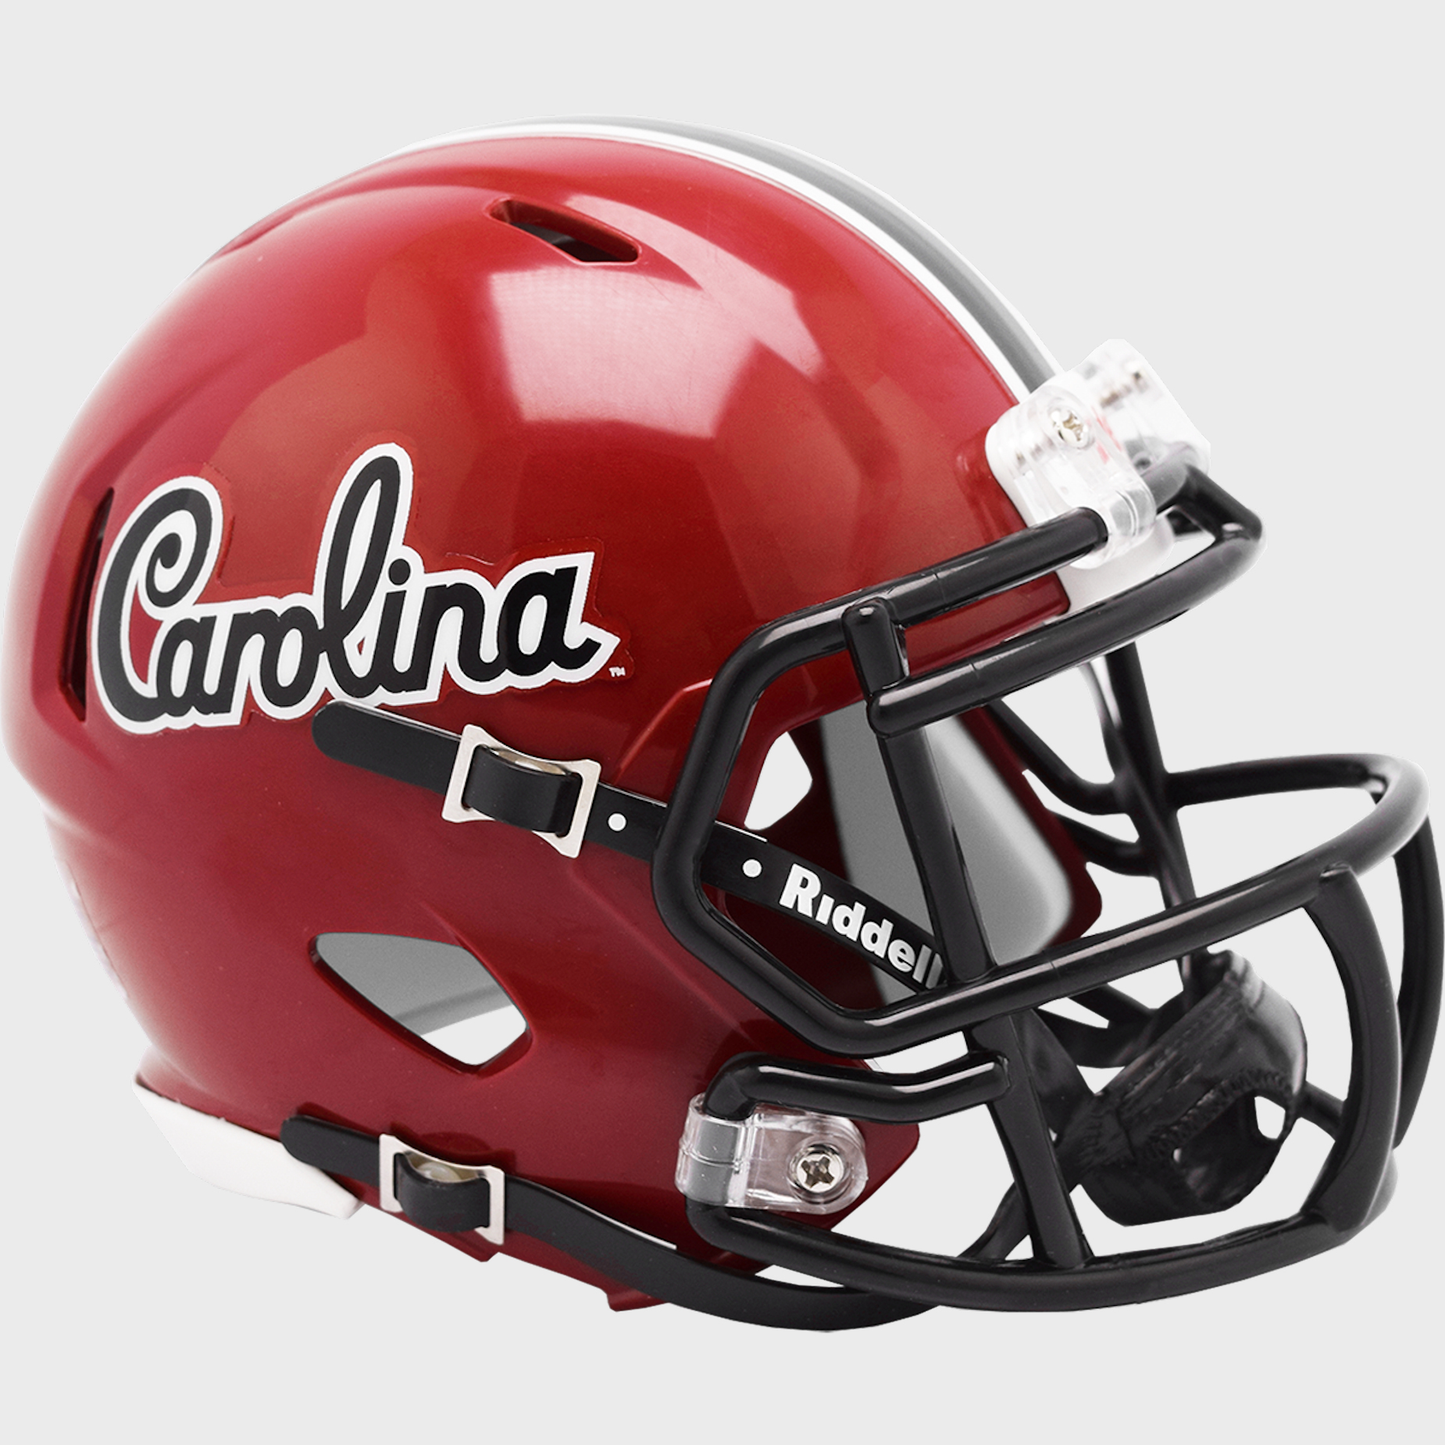 South Carolina Gamecocks mini helmet